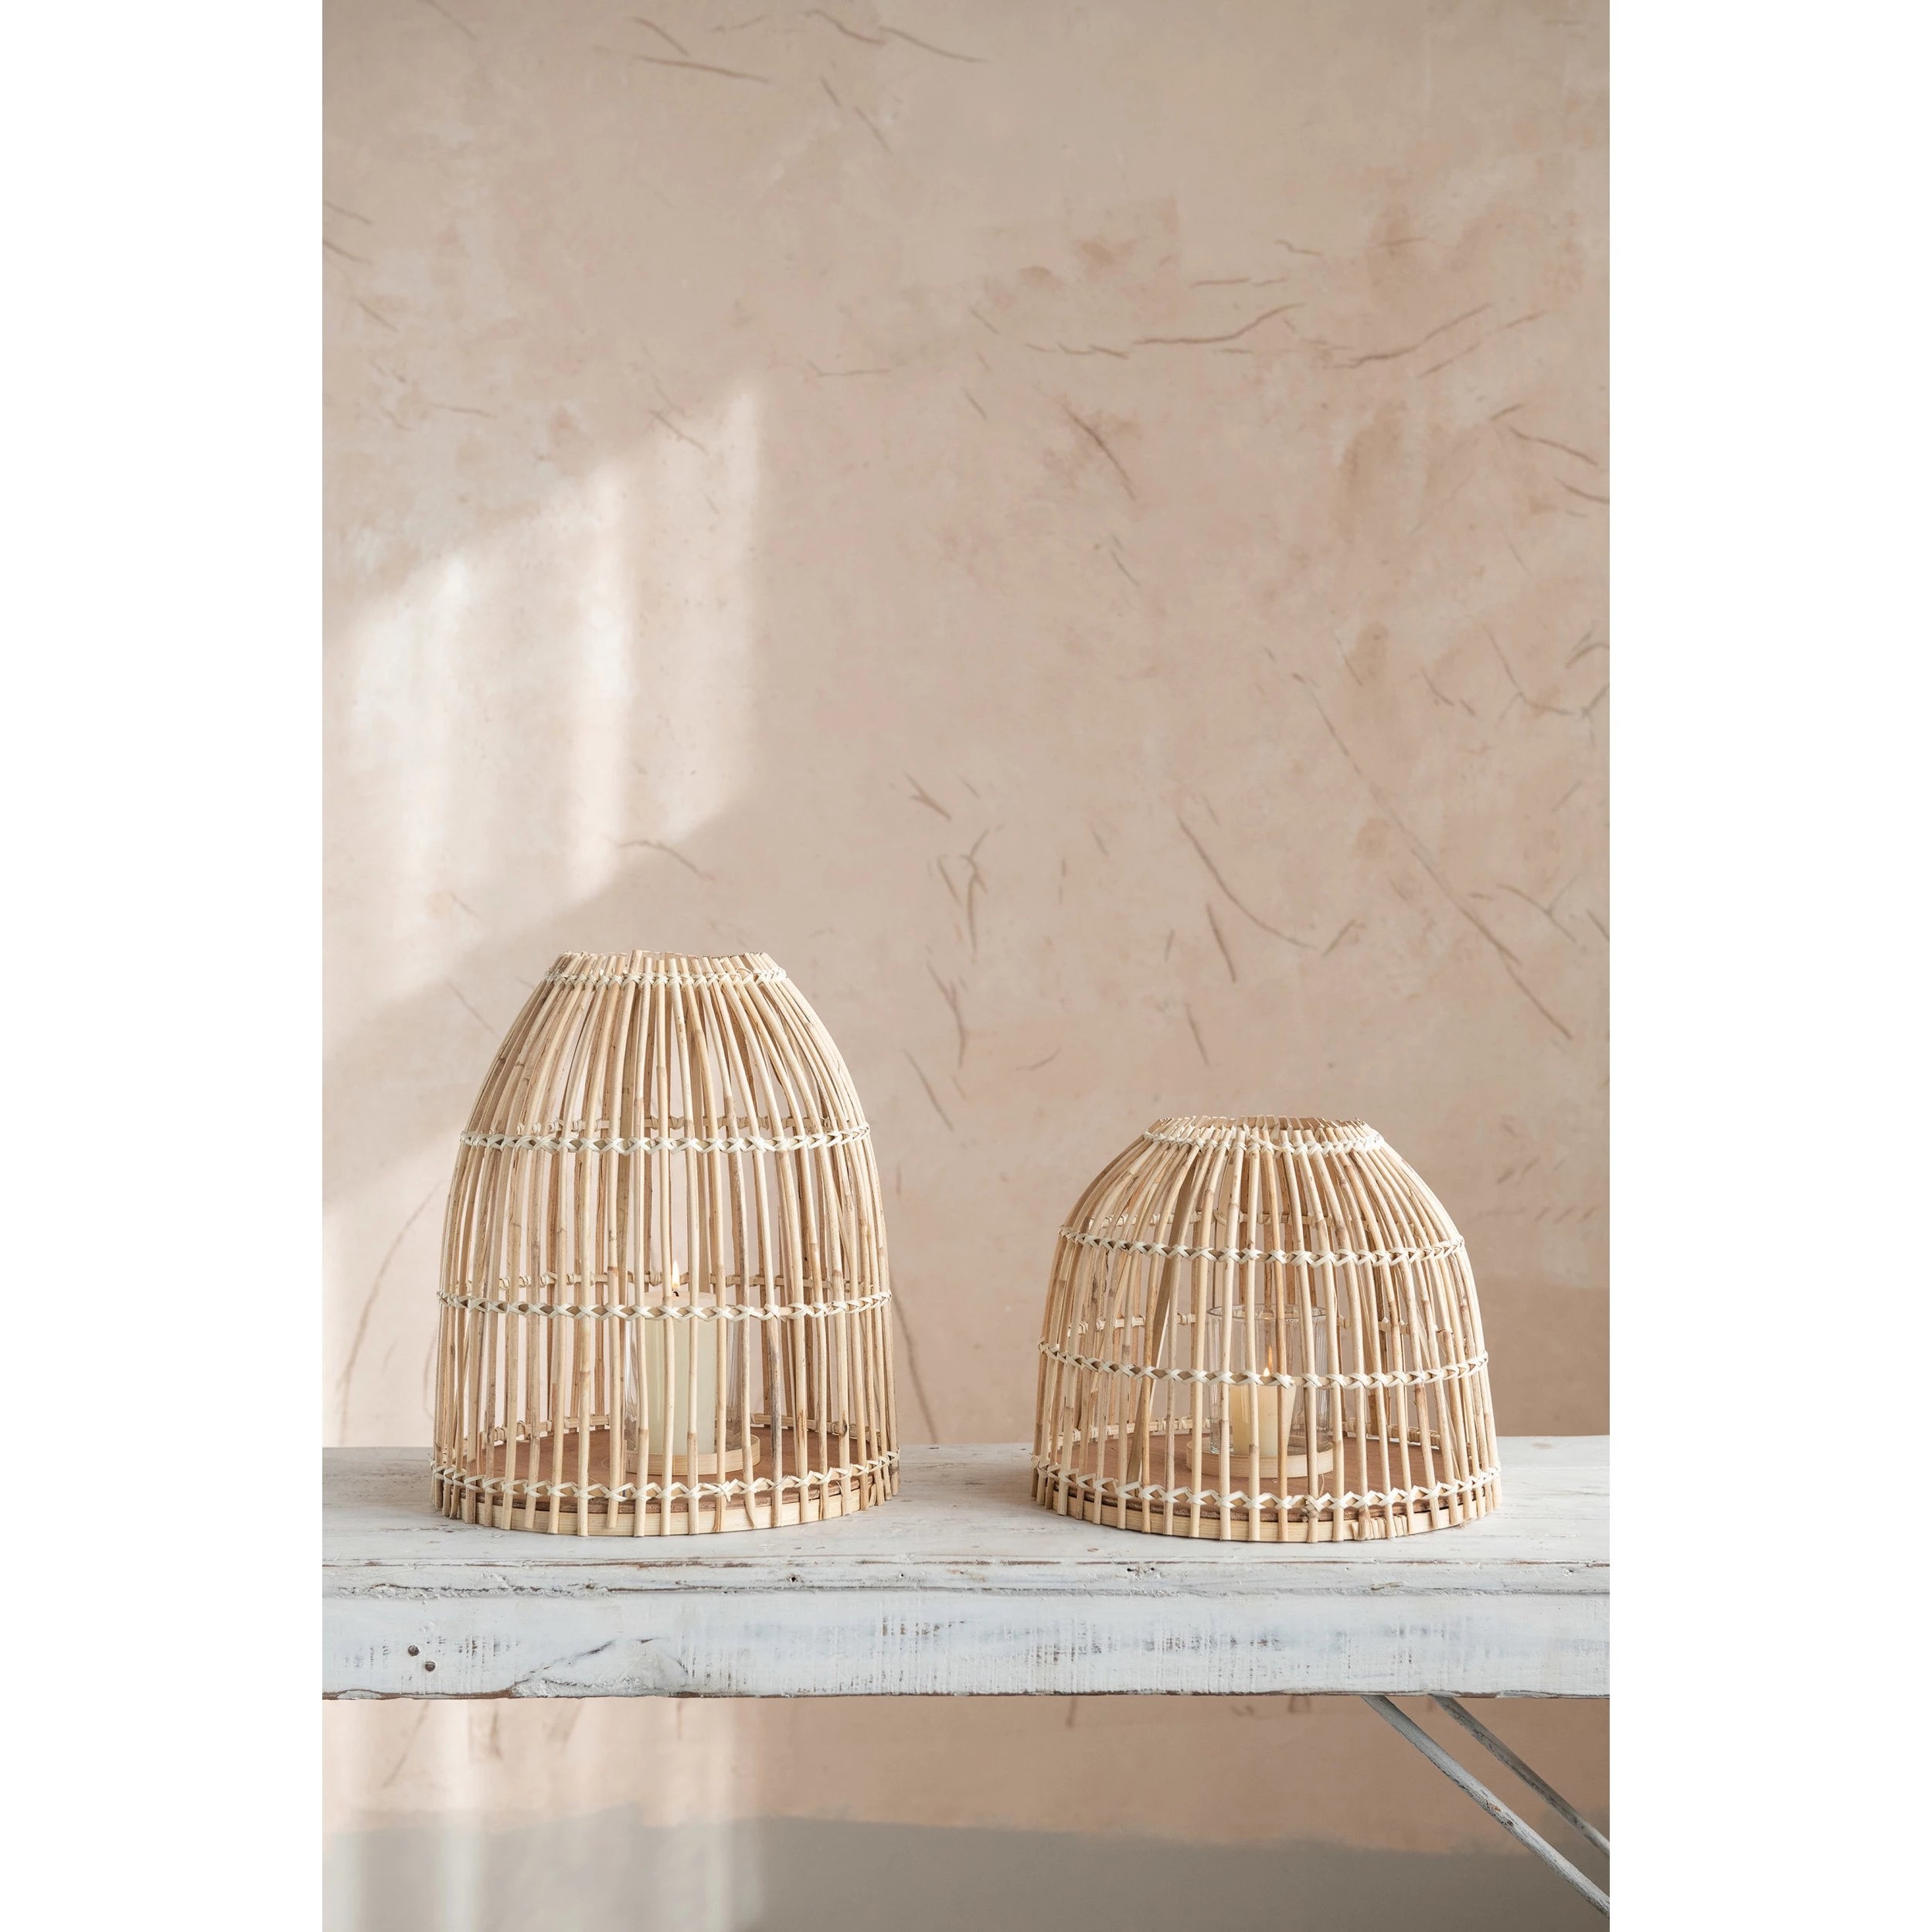 Bamboo Lanterns with Glass Inserts, Set of 2 Sizes - Image 1